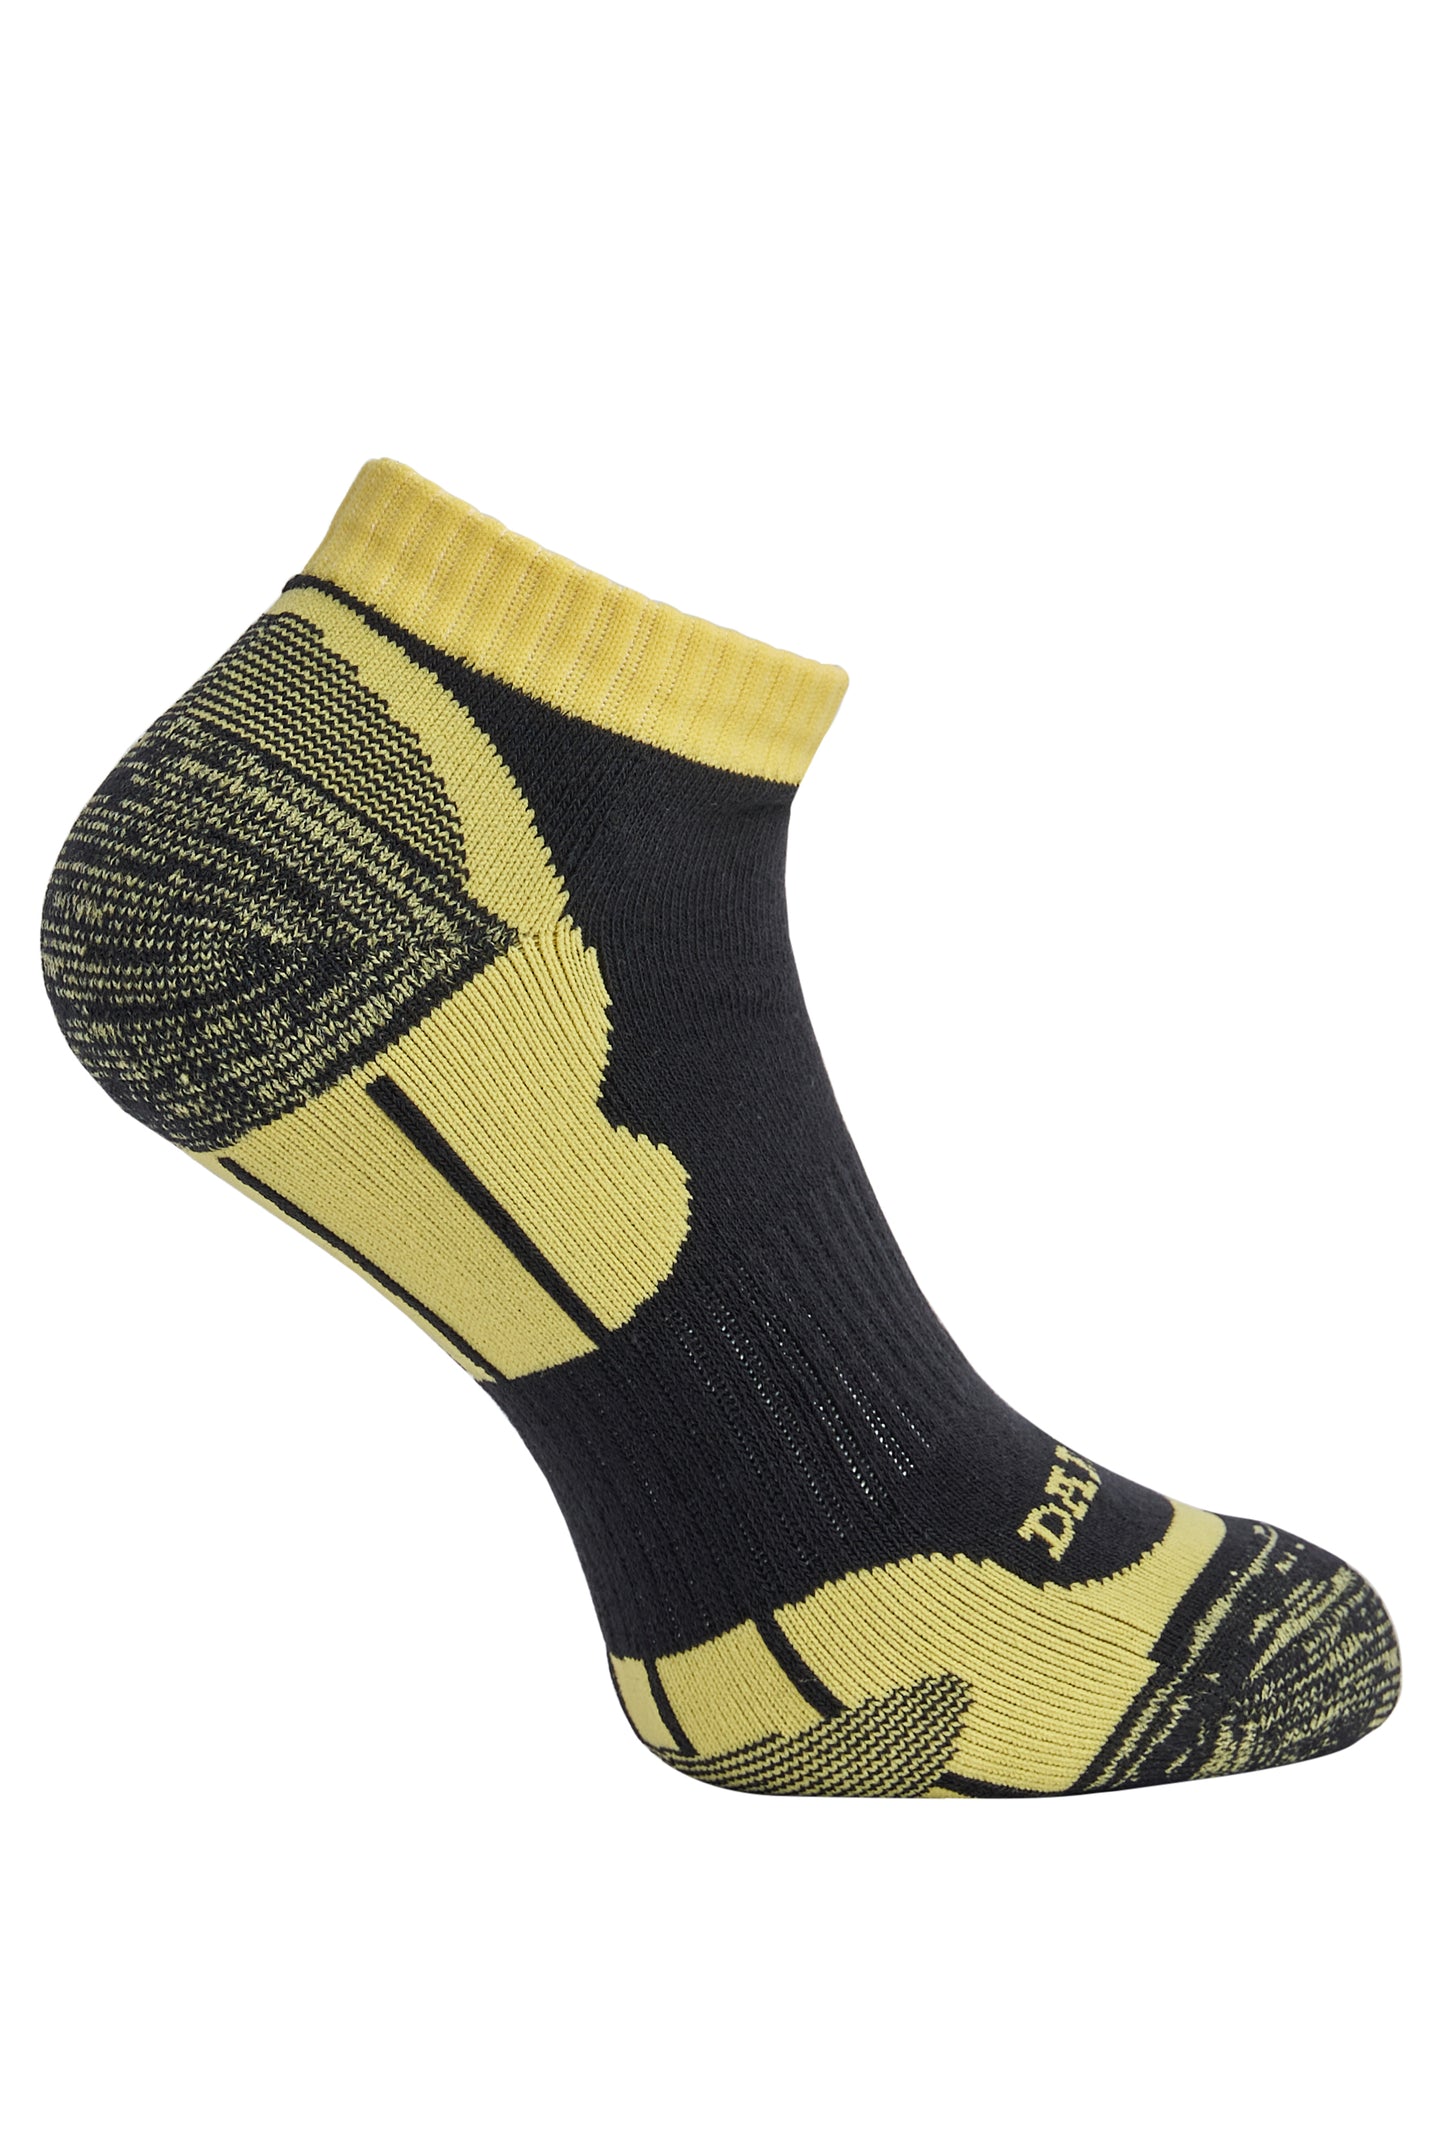 Side of Darn Tough Men's Sports Ankle Socks in Yellow